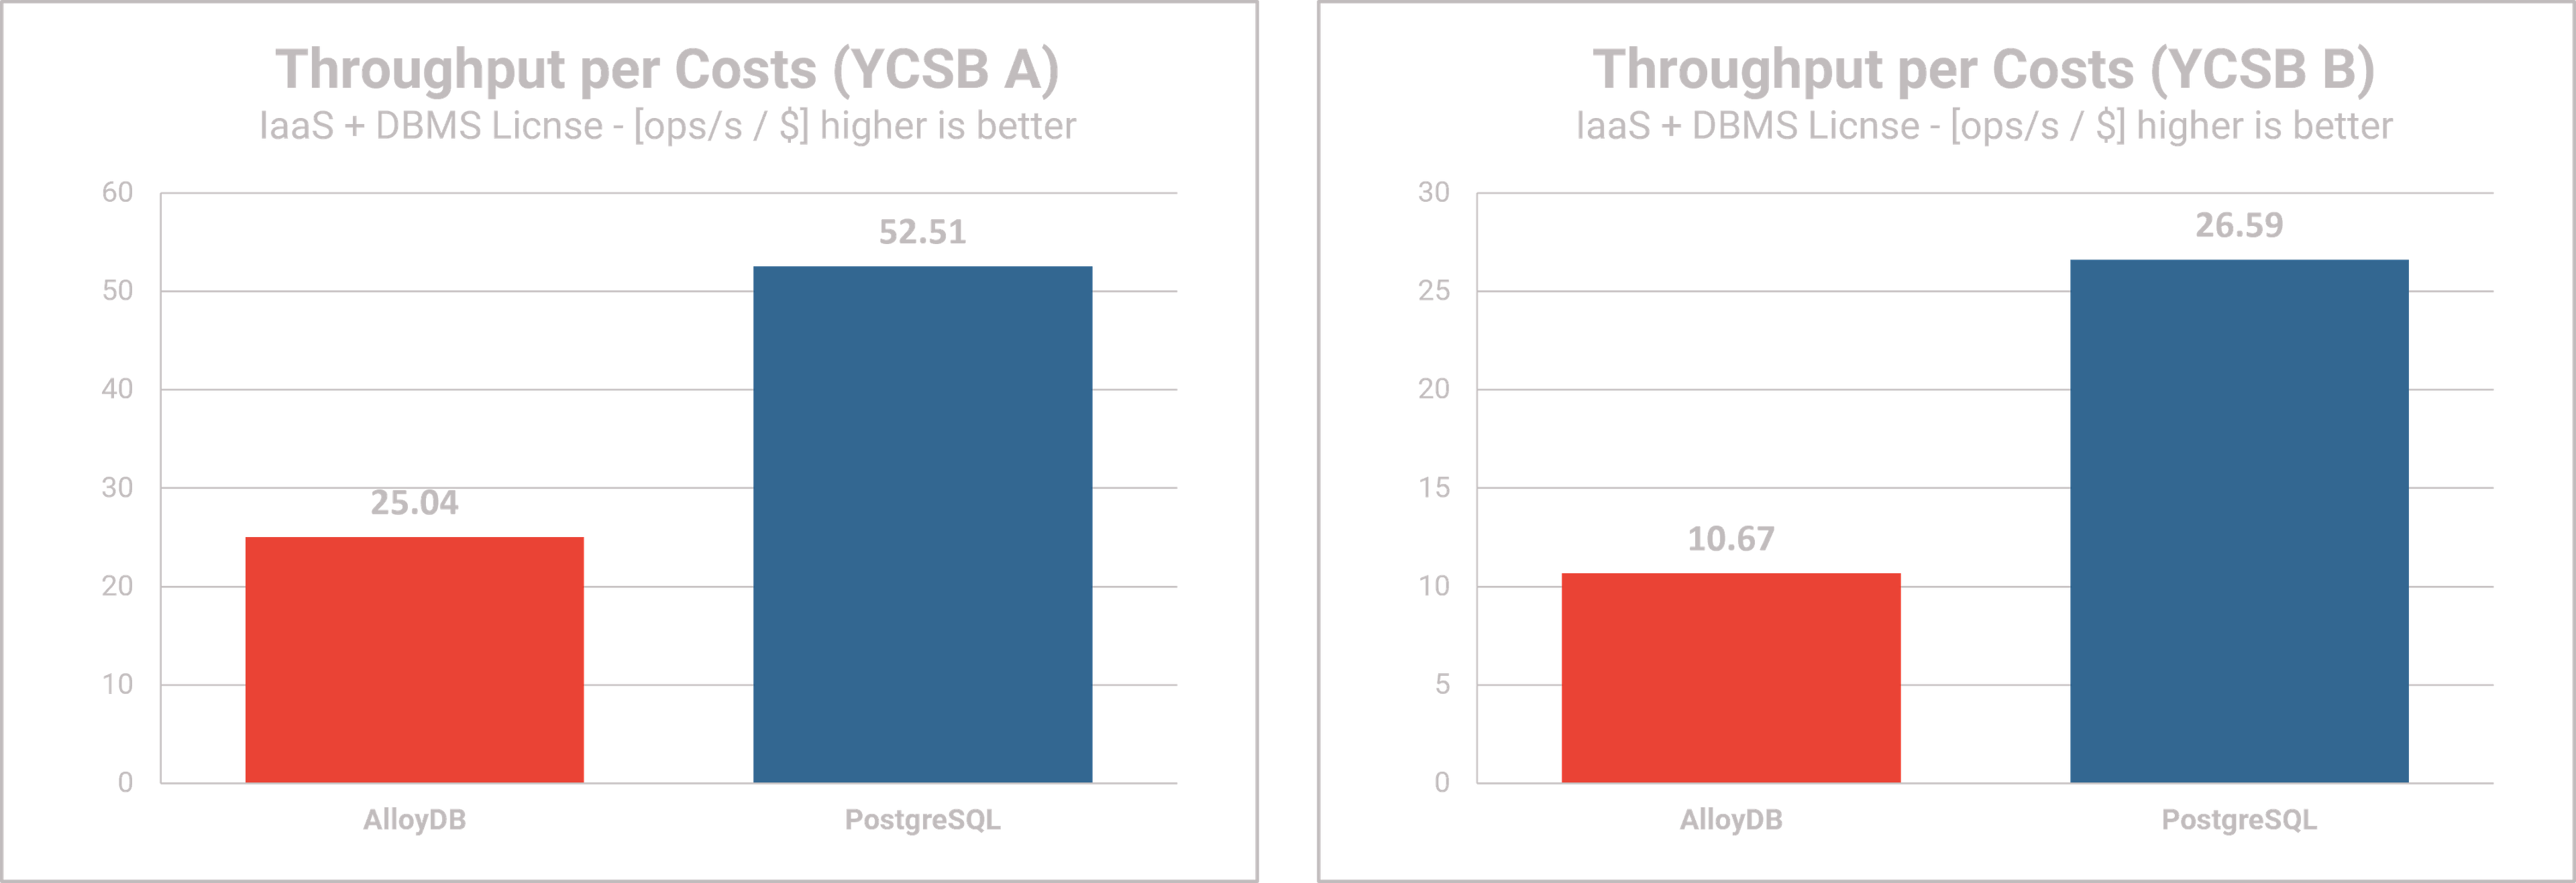 AlloyDB Omni performance testing - Performance per Cost 2 YCSB